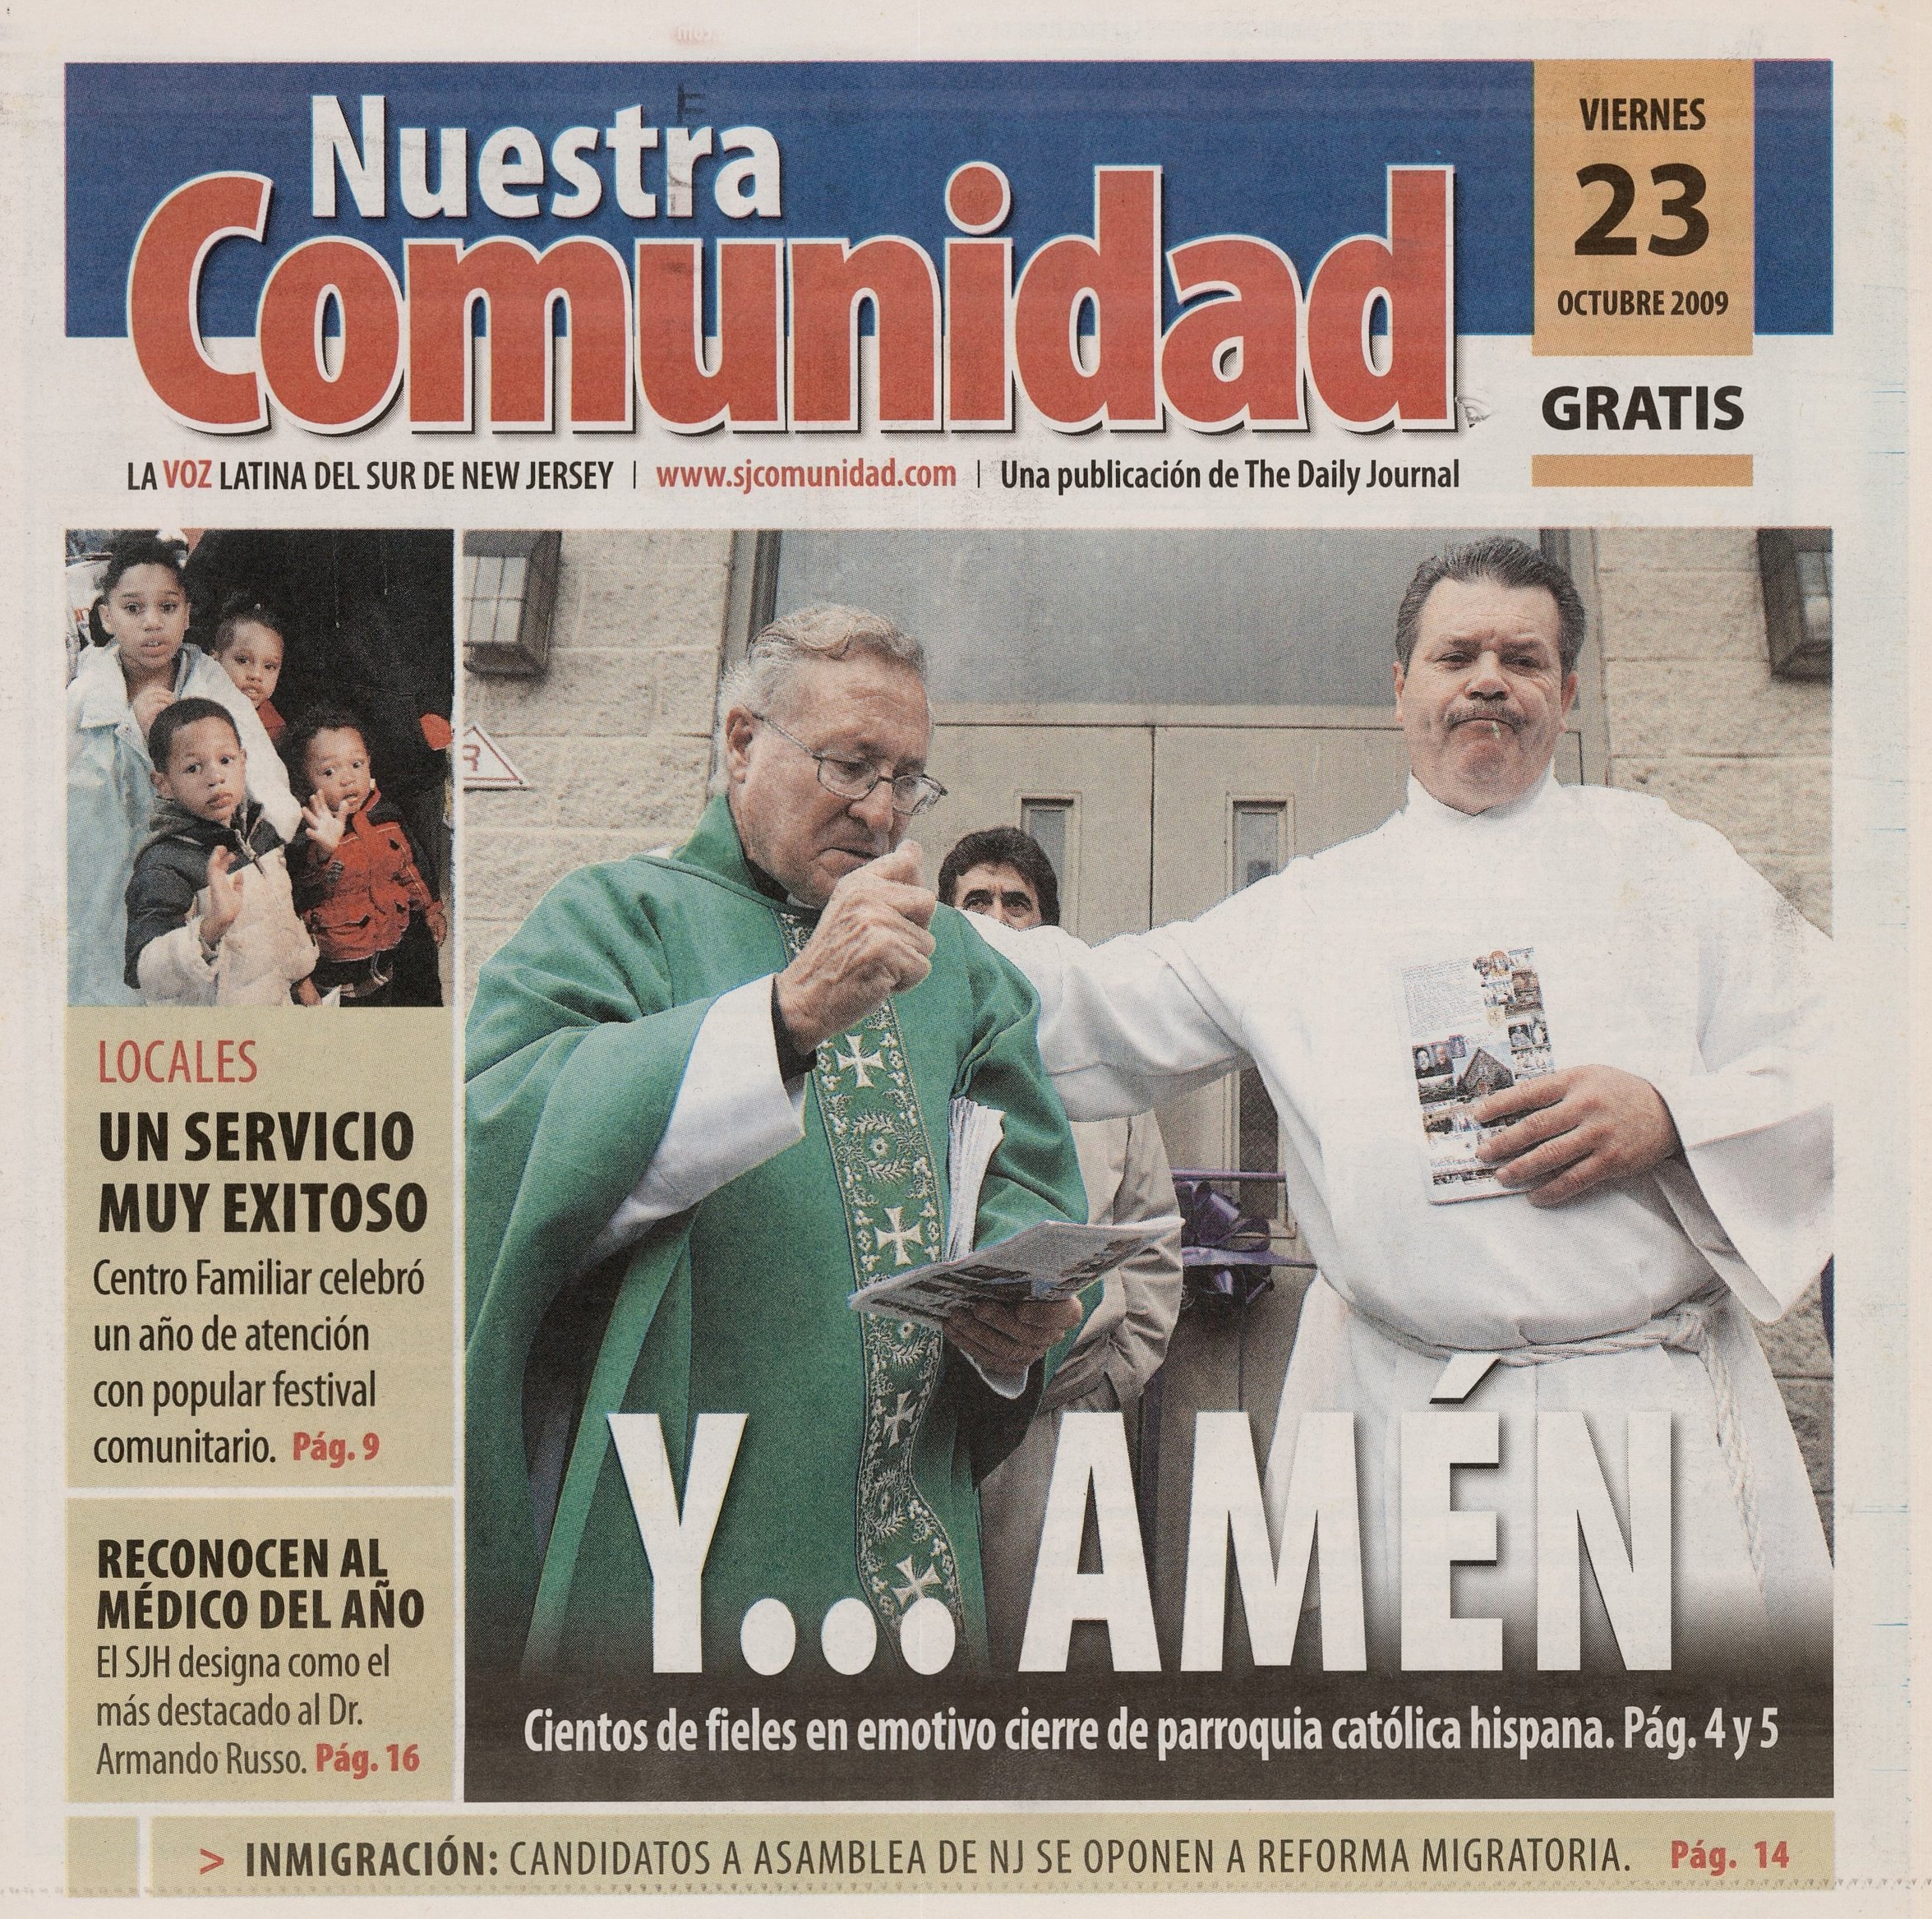  Historic Hispanic church closes in Vineland October 23 2009 /  Nuestra Comunidad   